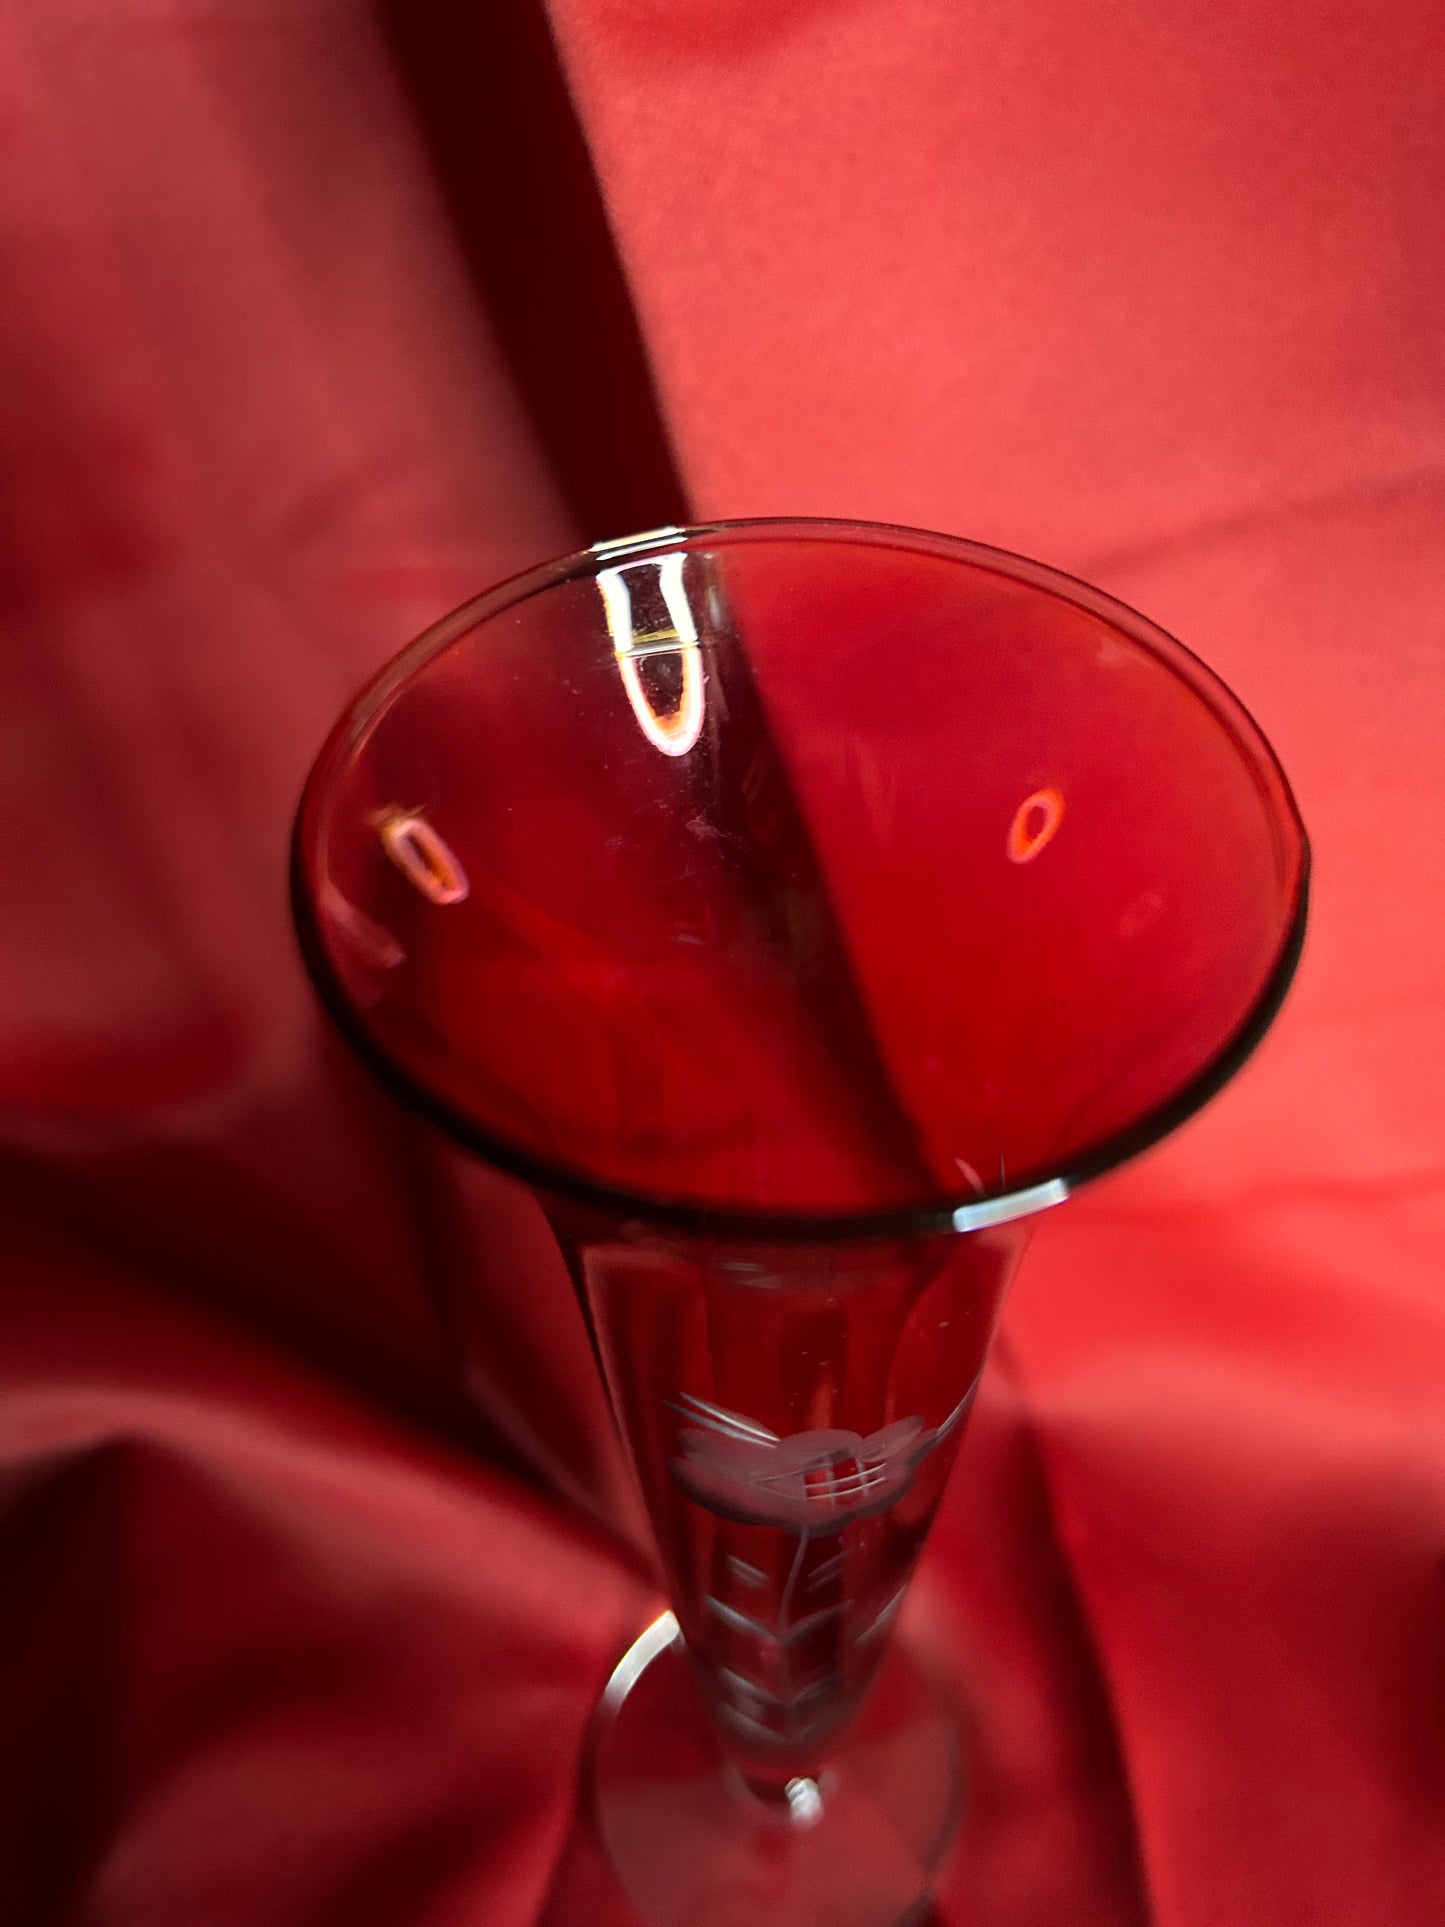 Cranberry Glass Bud Vase